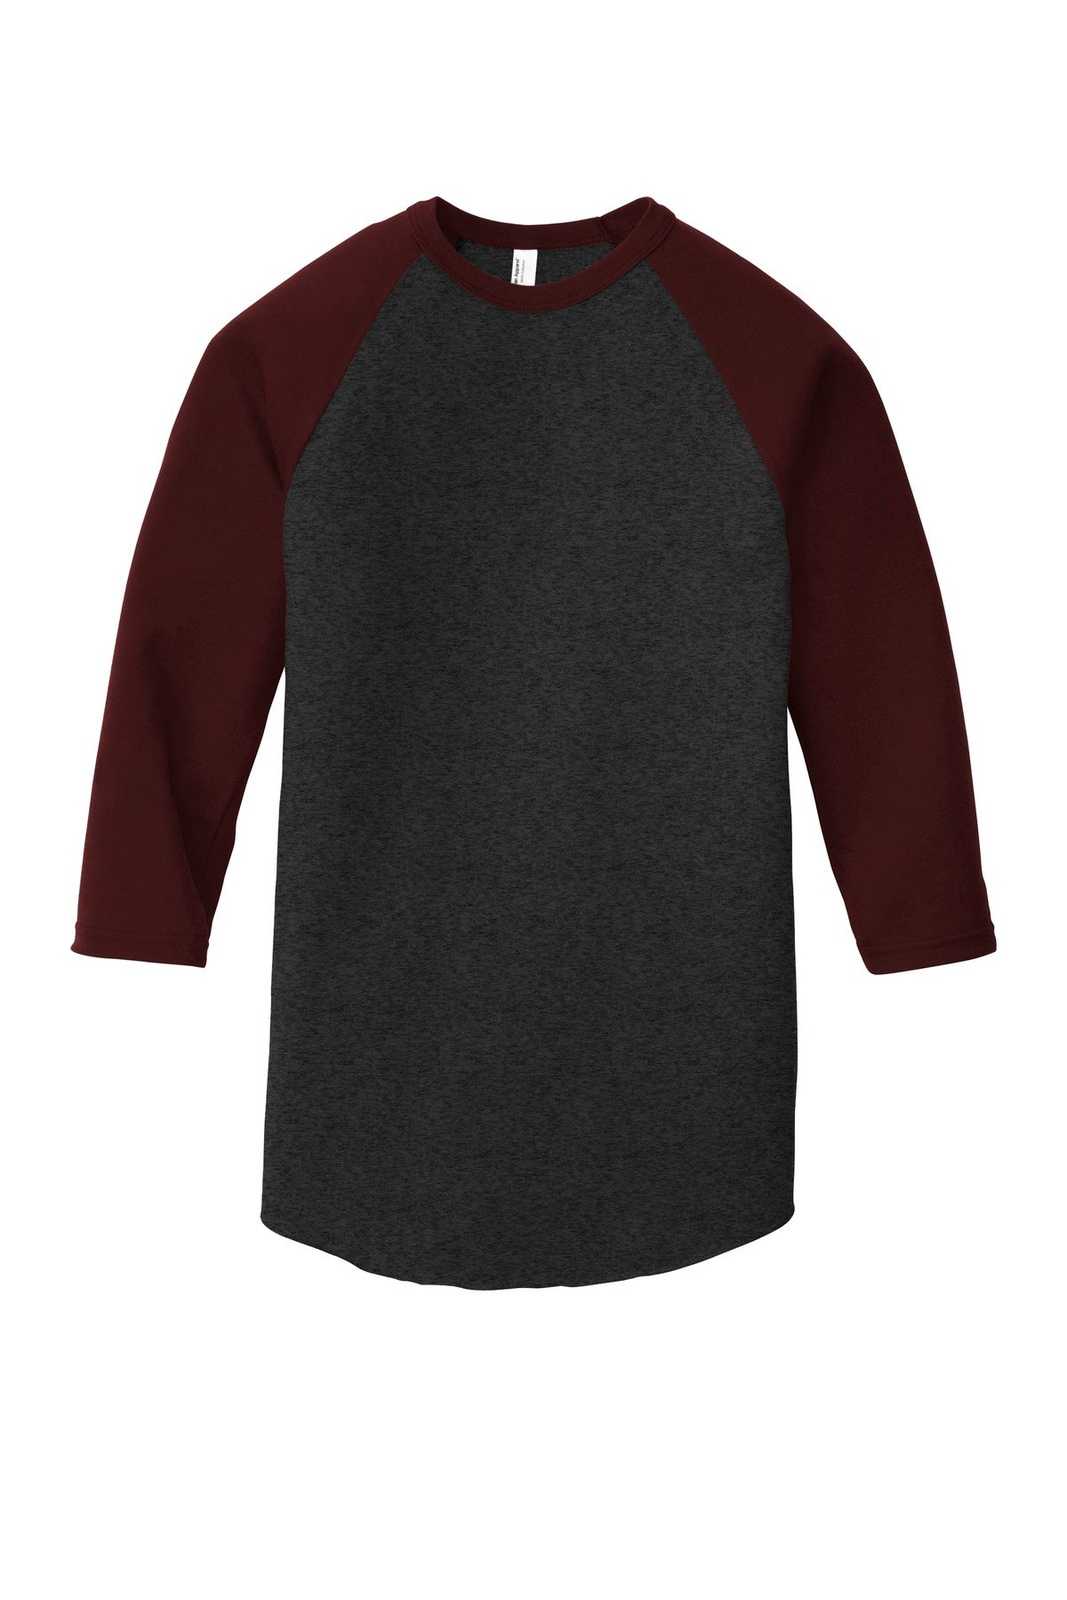 American Apparel BB453W Poly-Cotton 3/4-Sleeve Raglan T-Shirt - Heather Black/ Truffle - HIT a Double